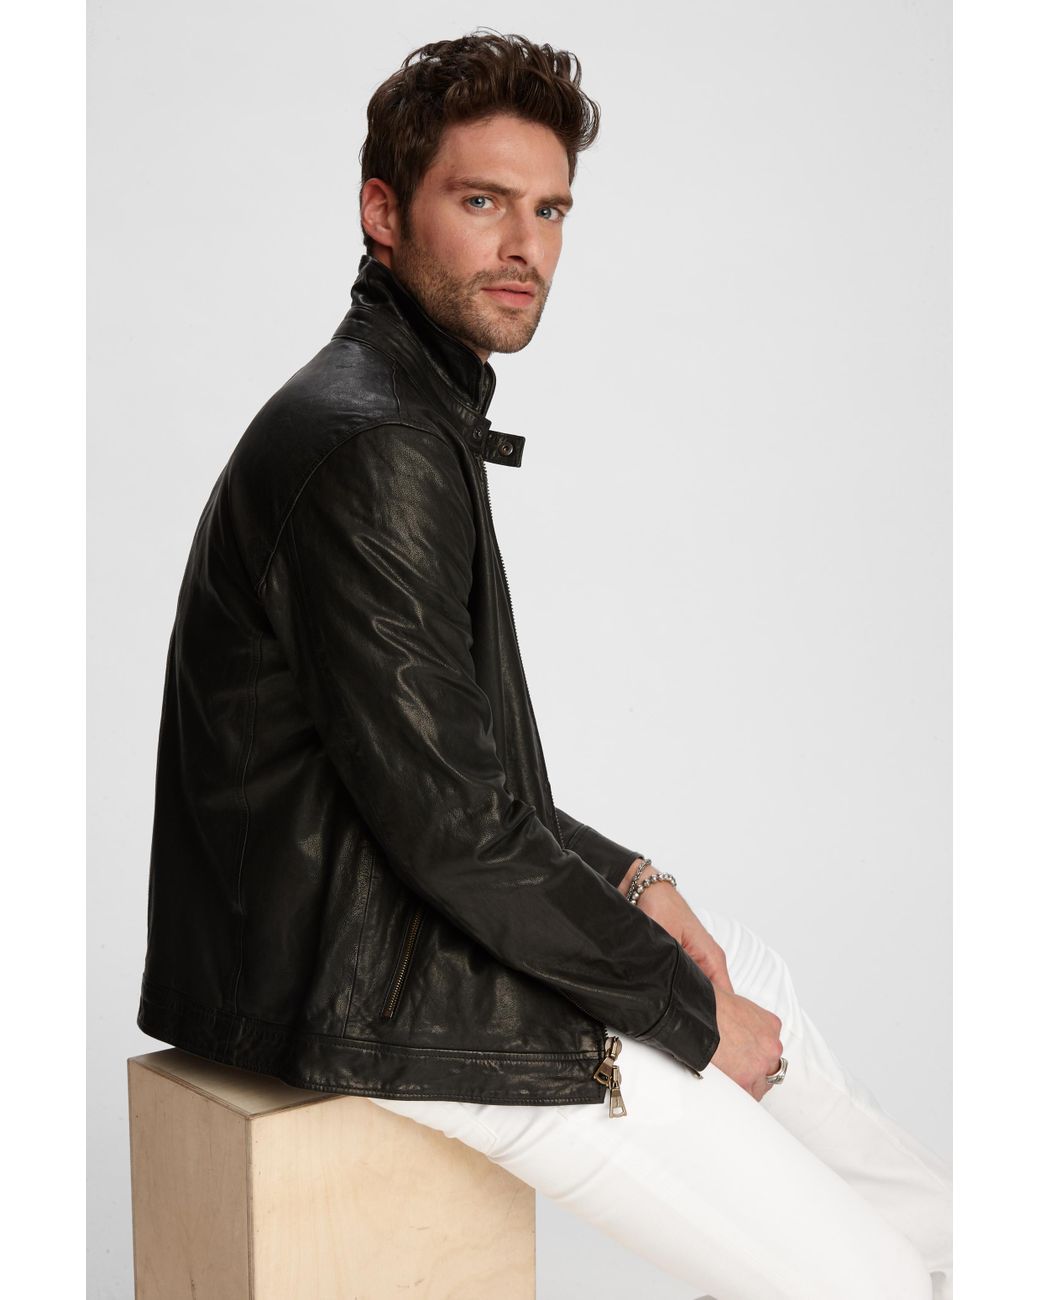 John Varvatos Wire Collar Leather Jacket in Black for Men - Lyst